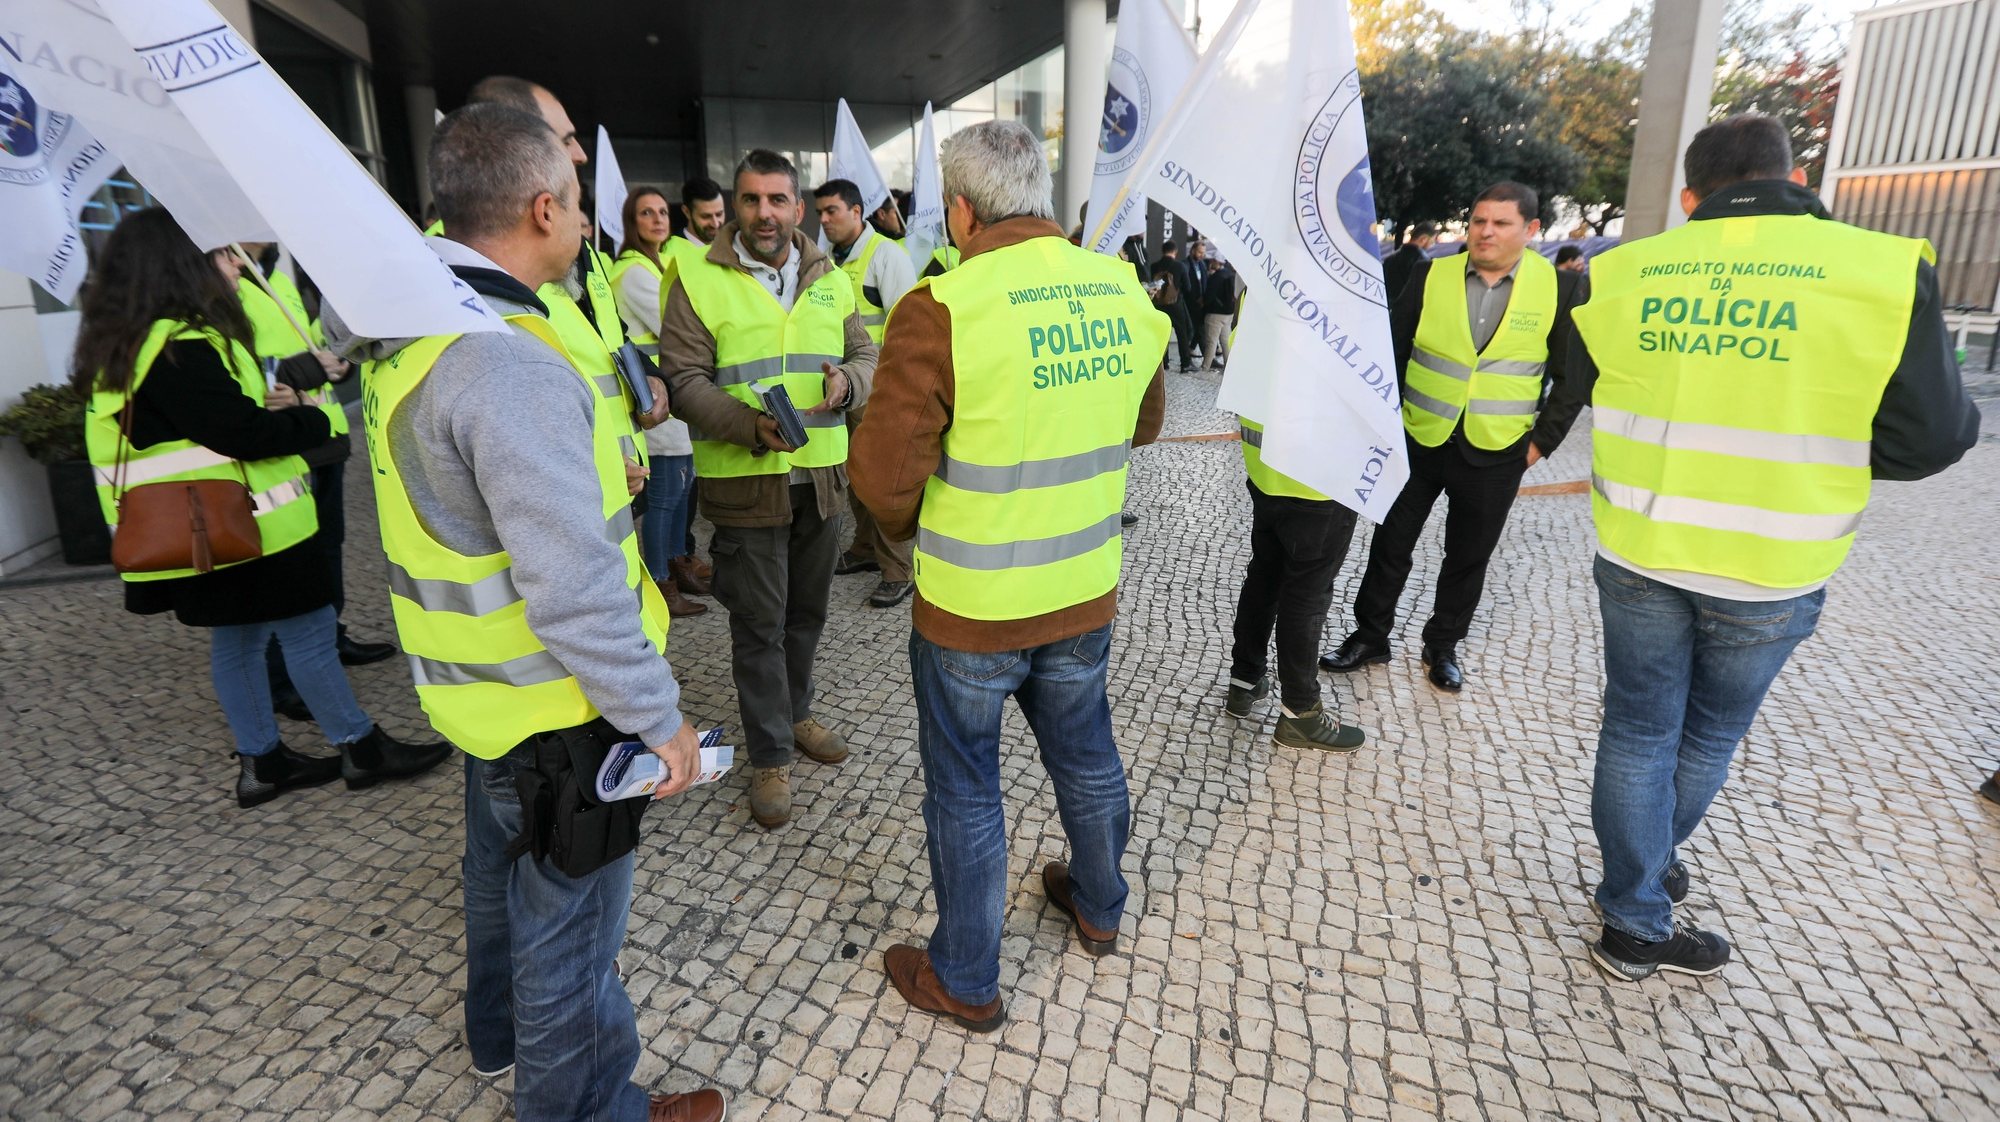 Polícias do Sindicato Nacional da Polícia (Sinapol) protestam no Parque das Nações onde decorre a Web Summit, Lisboa, 5 de novembro de 2018. MIGUEL A. LOPES/LUSA